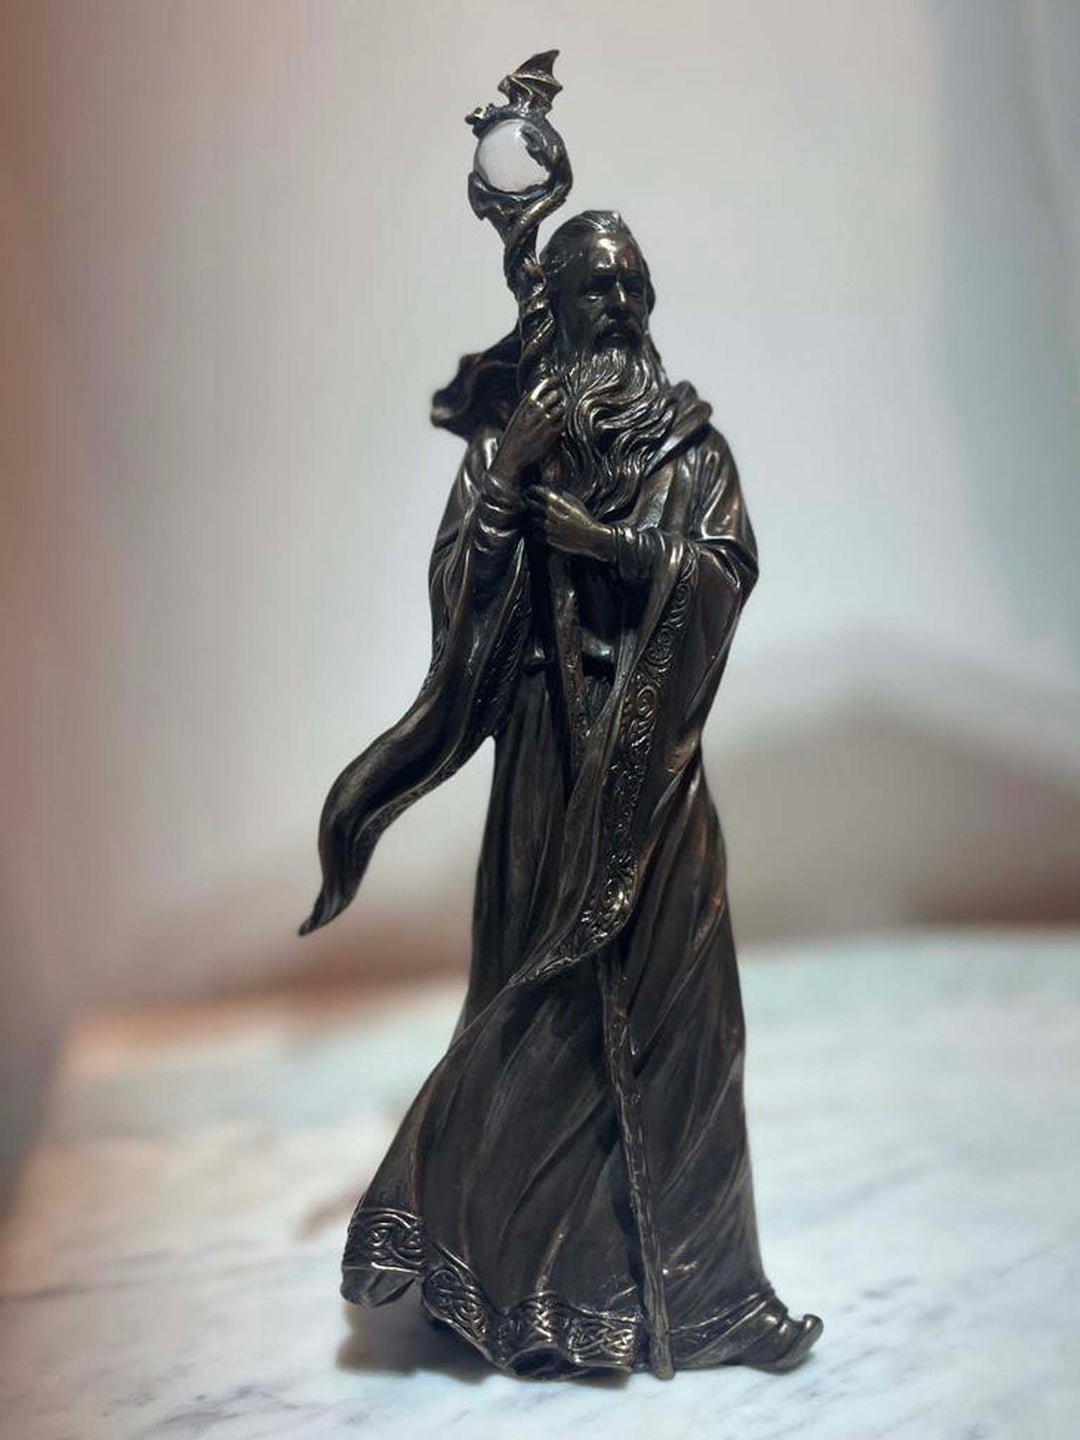 Magical Merlin figurine, Veronese Design Merlin  